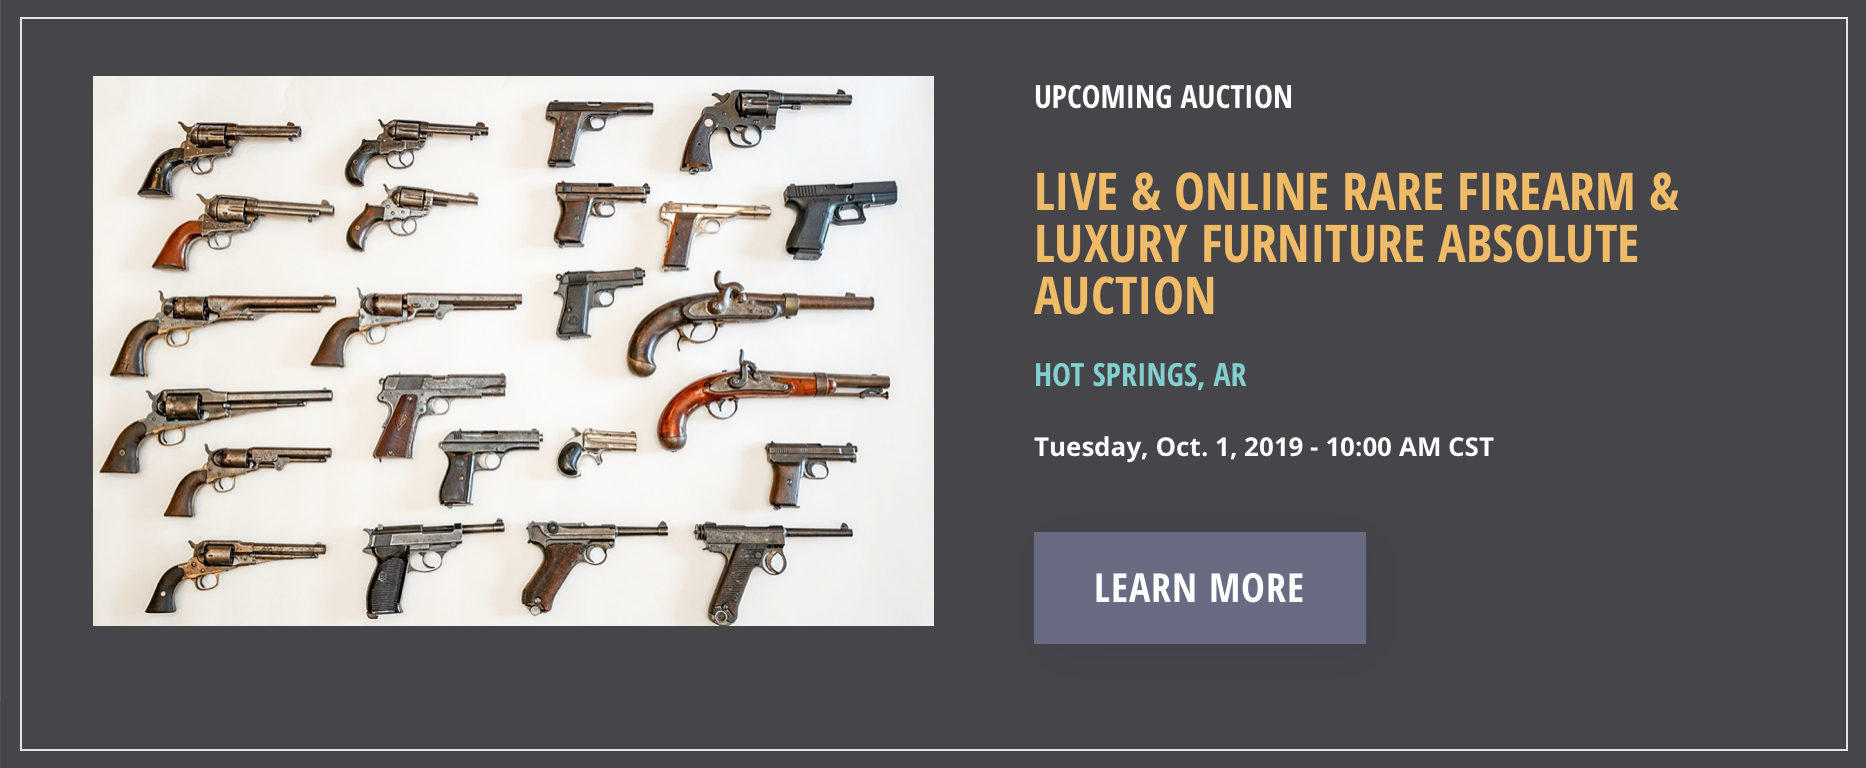 firearm-auction.jpg